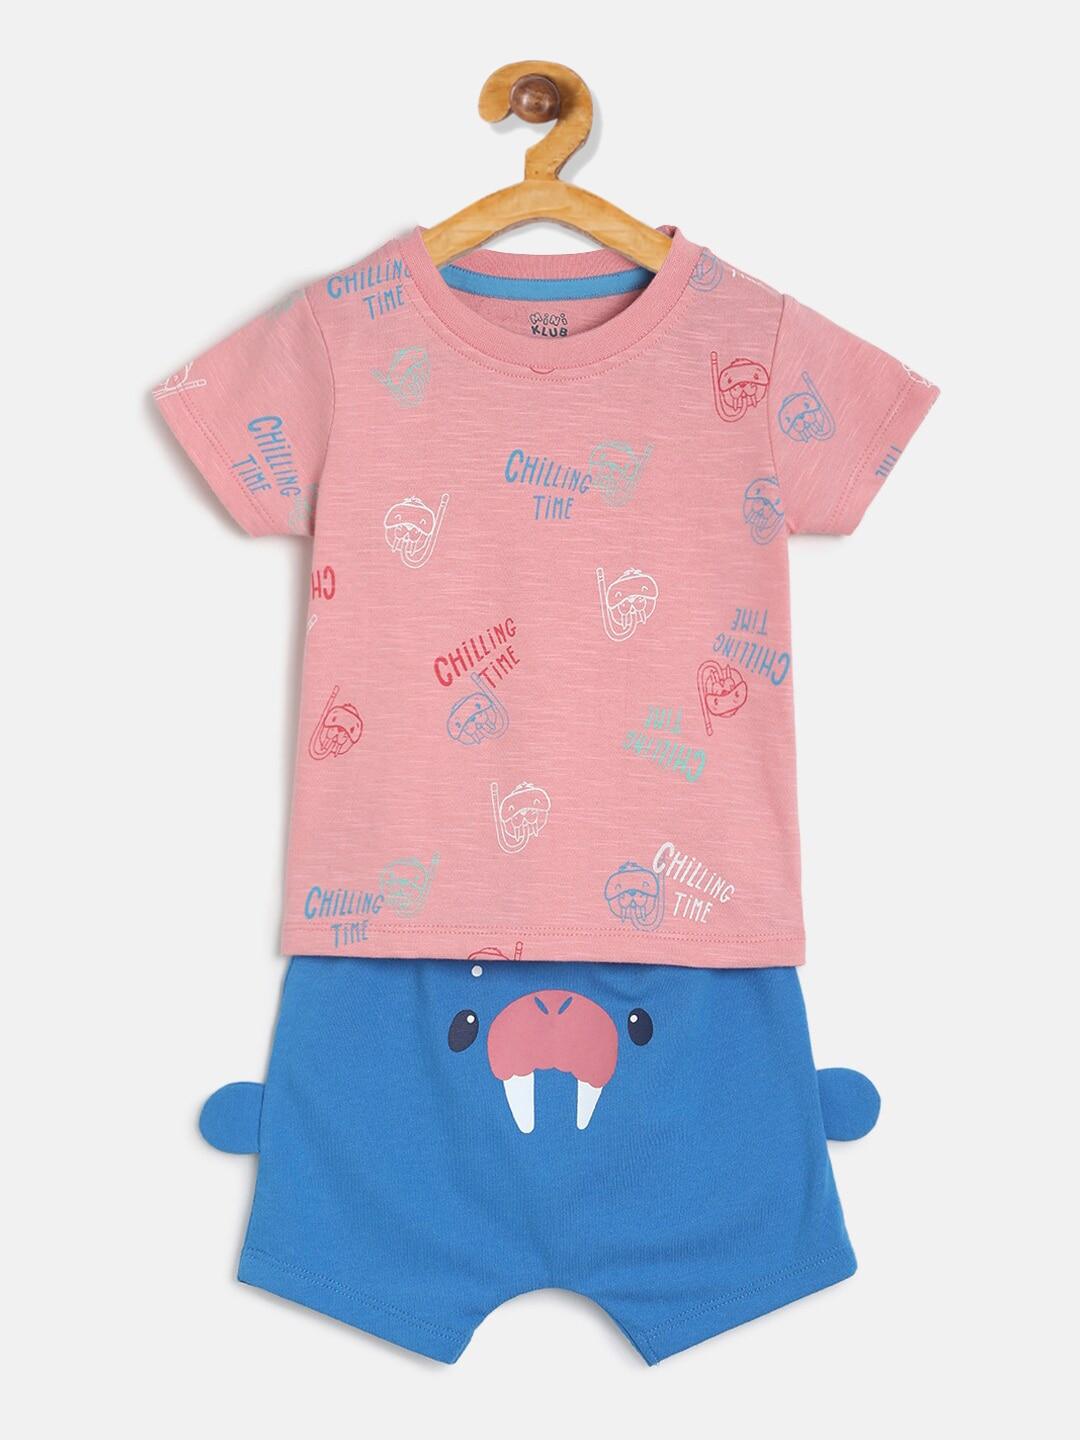 MINI KLUB Infant Boys Pink & Blue Printed Clothing Set